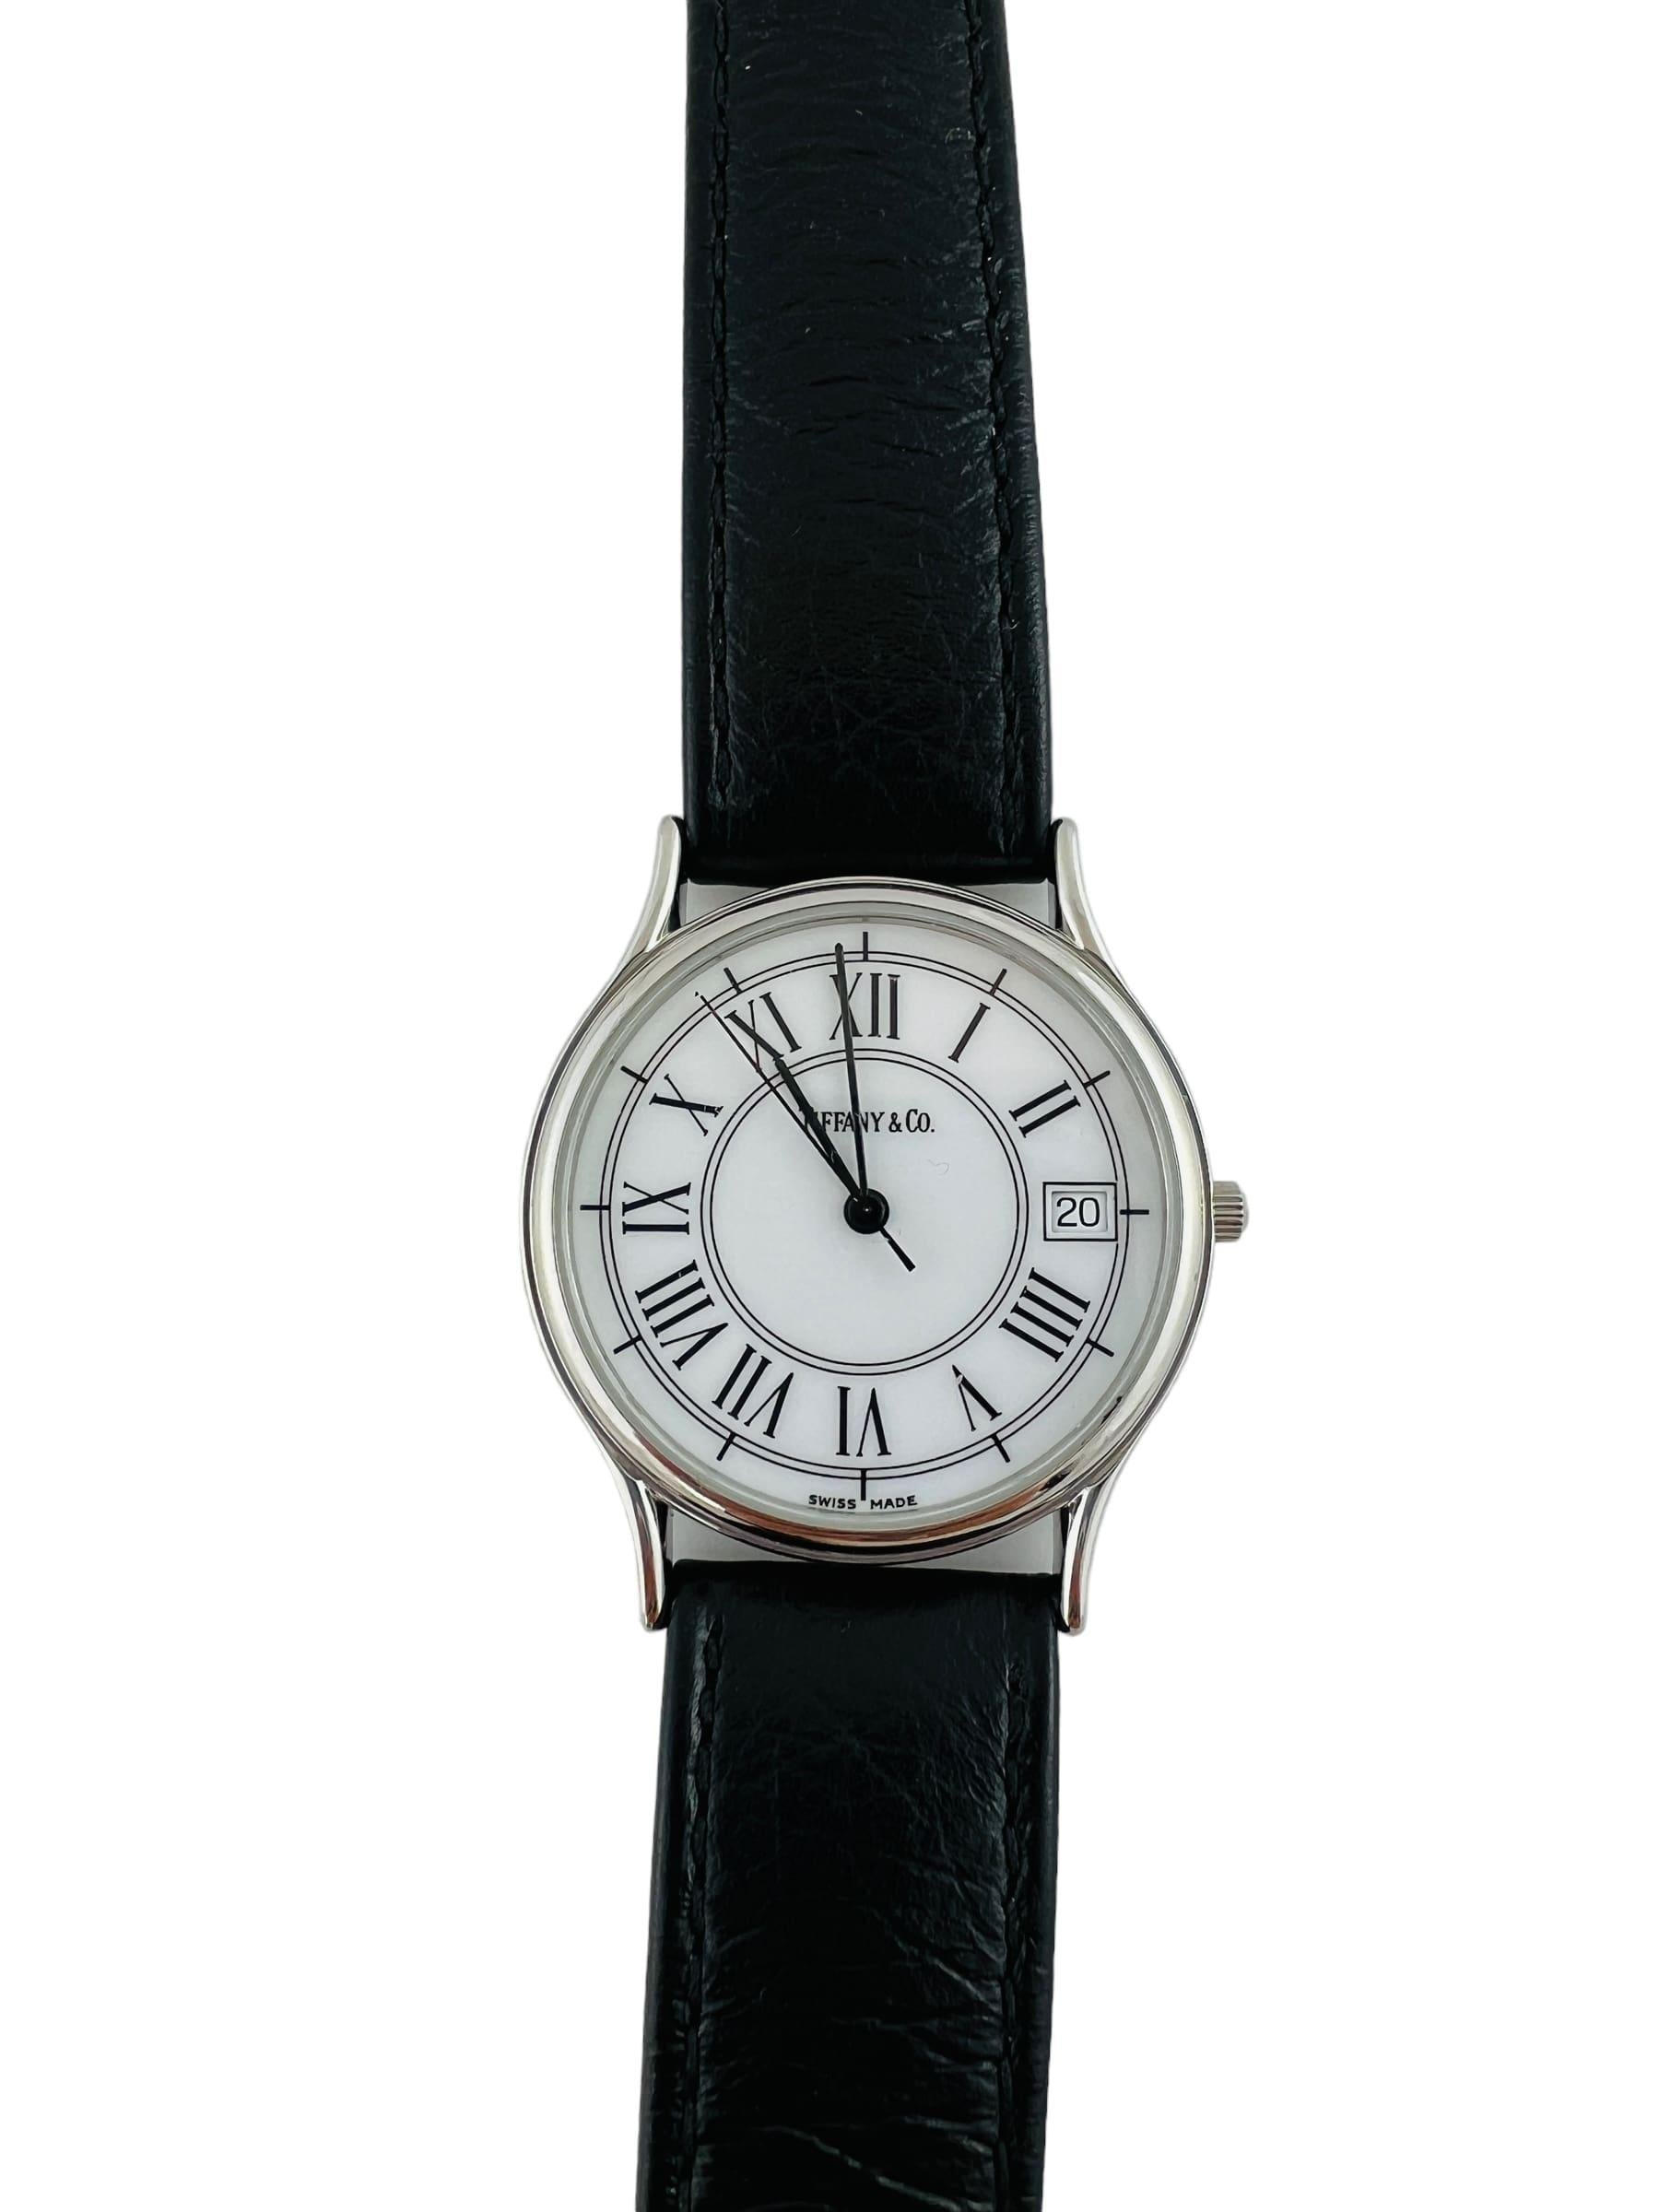 Tiffany & Co. Classic Watch White Roman Dial Quartz with Box 7